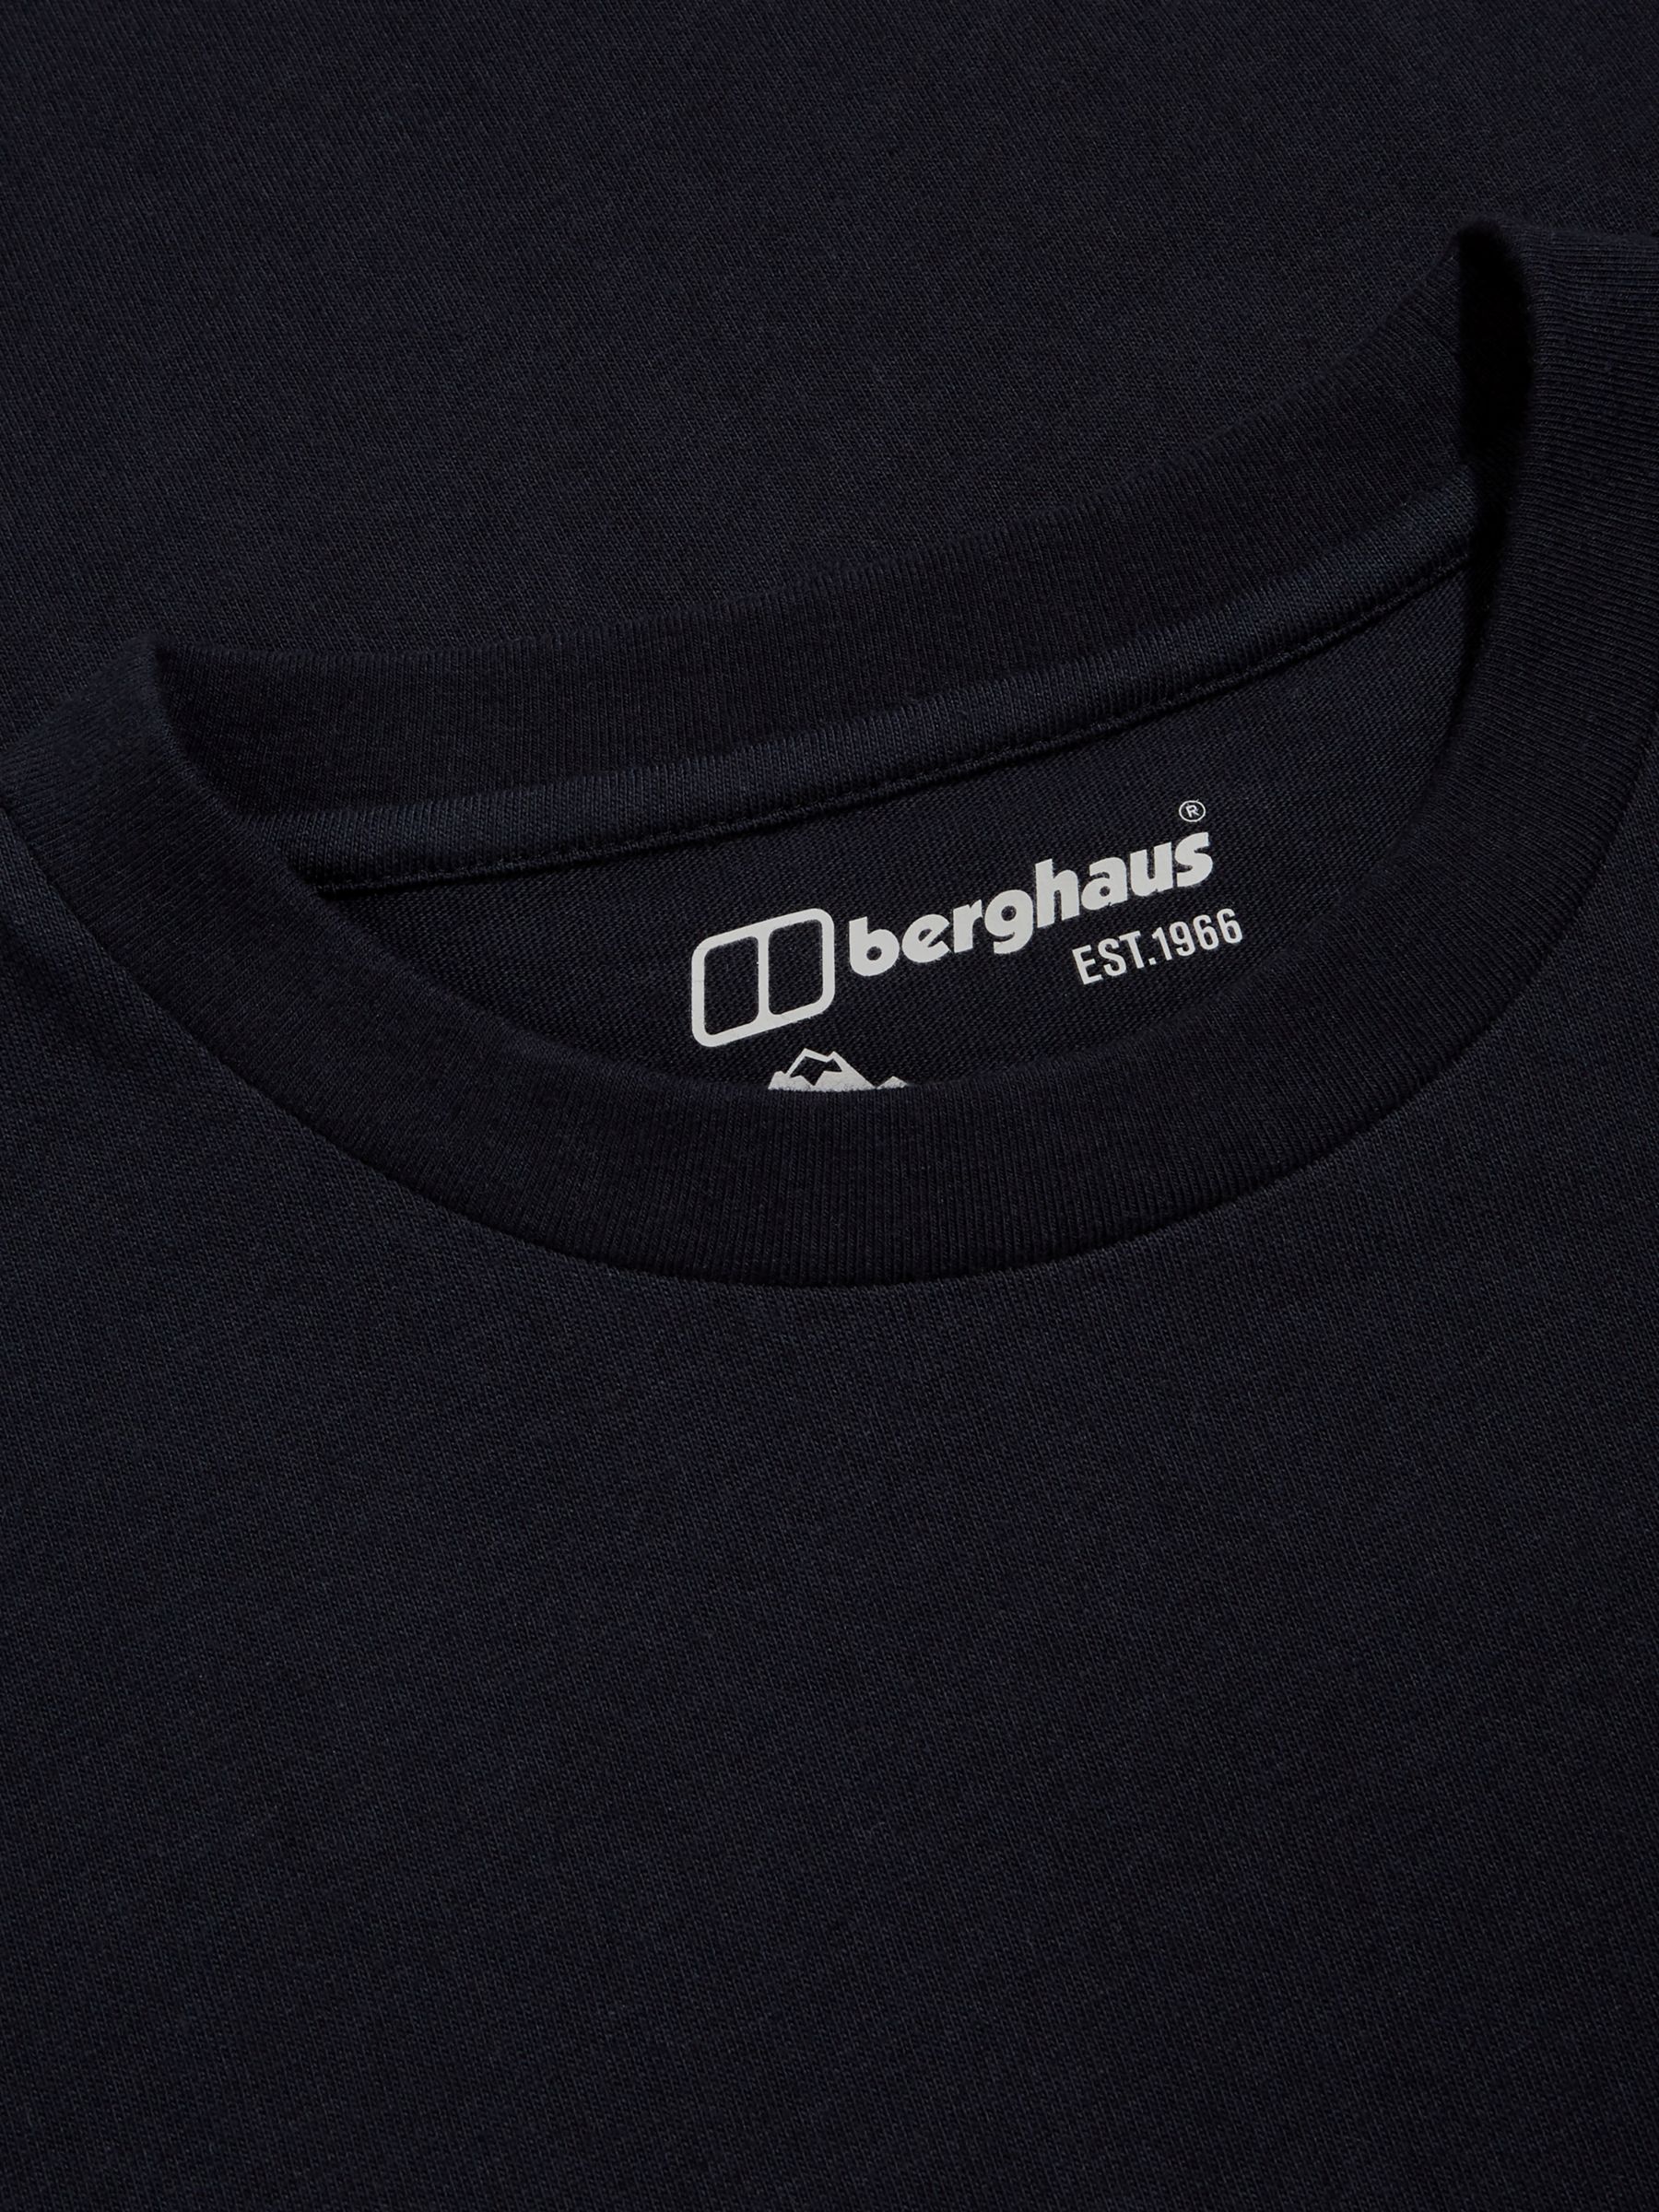 Berghaus Organic Cotton Short Sleeve T-Shirt, Black, XL